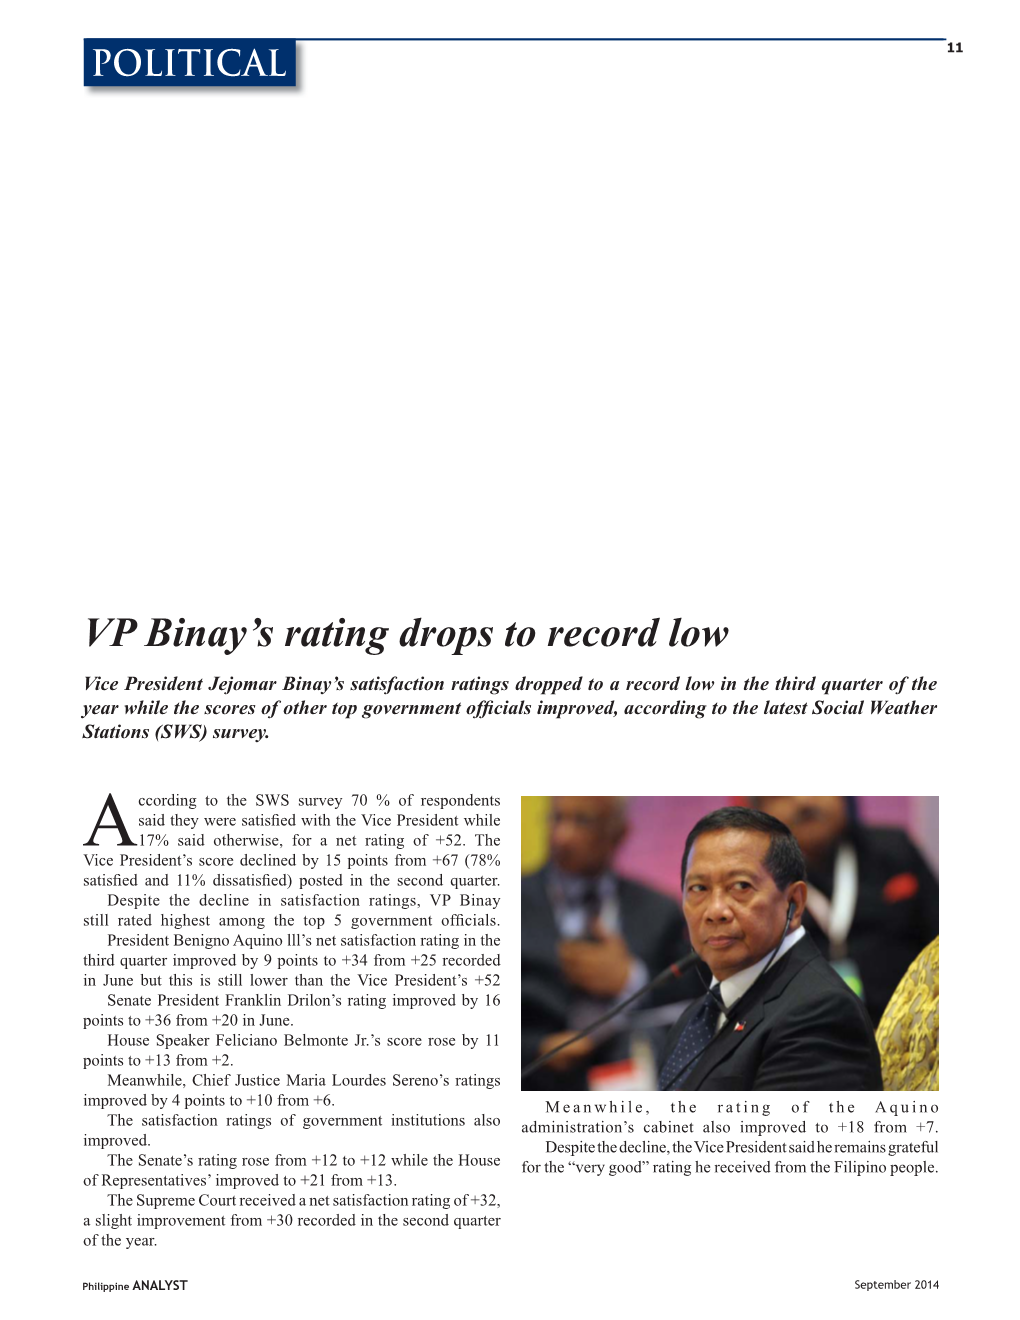 VP Binay's Rating Drops to Record